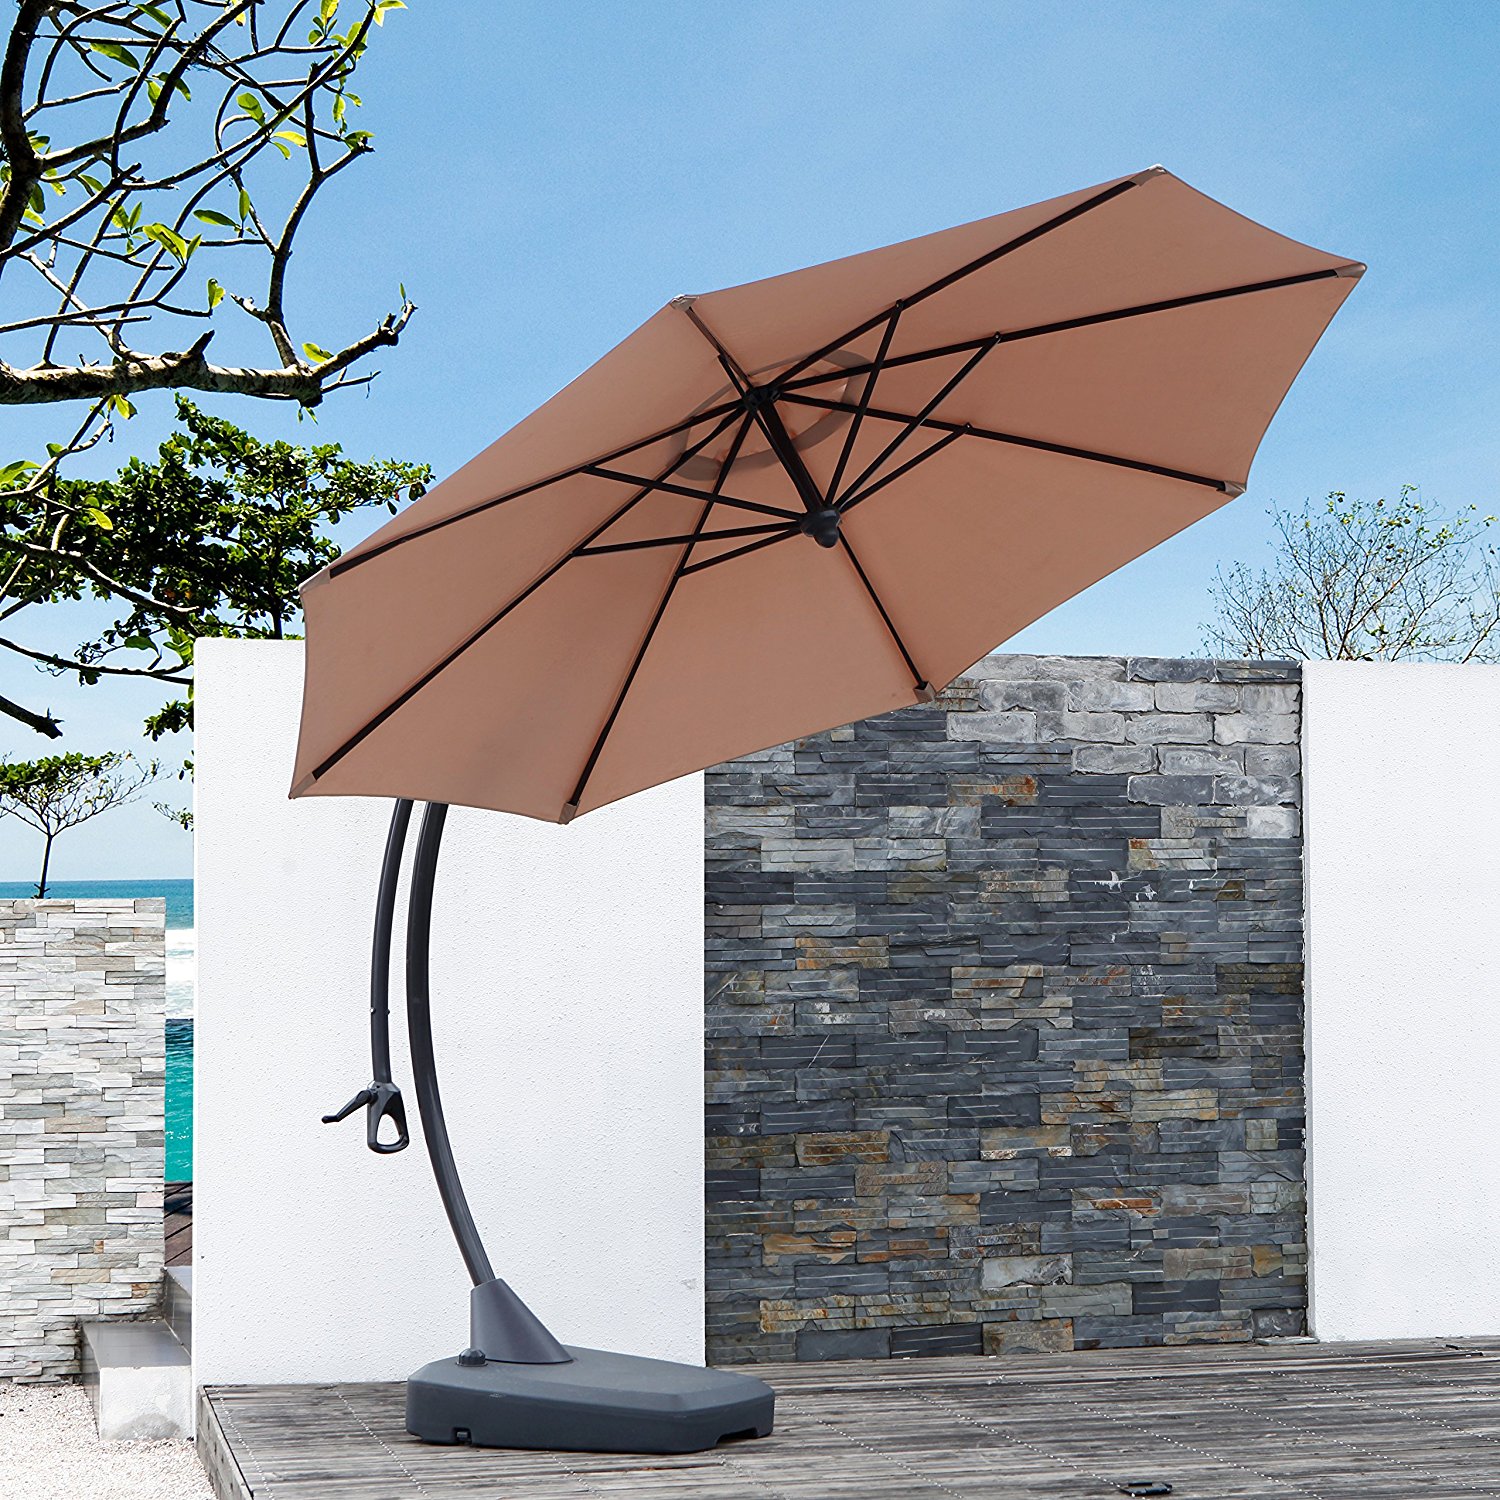 The Top 12 Best Offset Patio Umbrella